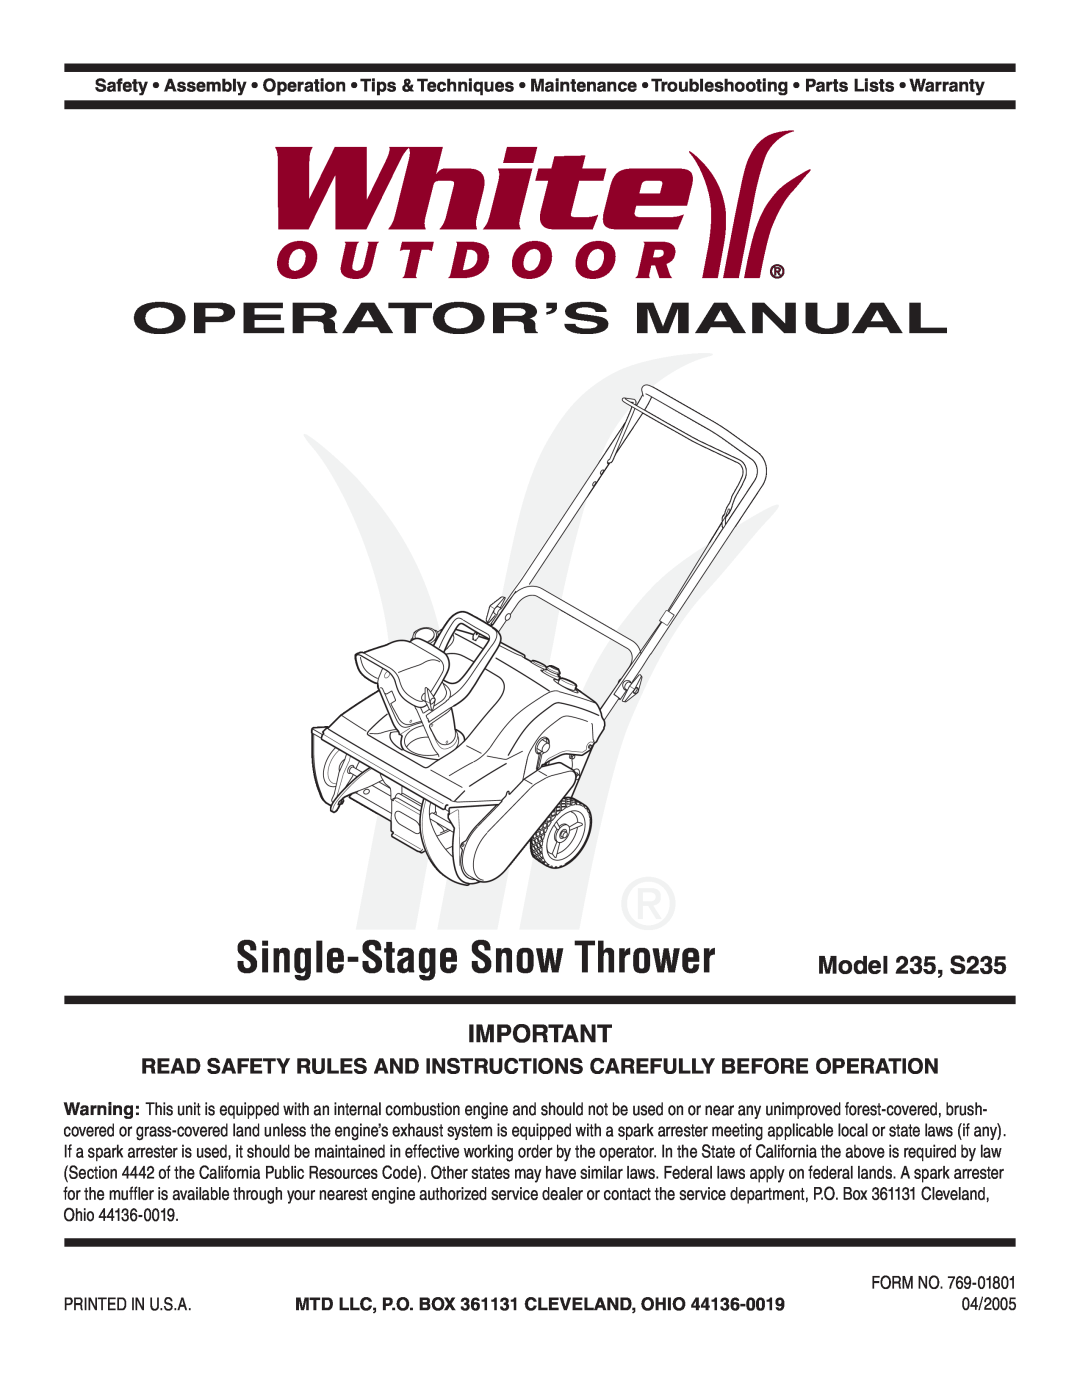 MTD warranty Operator’S Manual, Single-Stage Snow Thrower, Model 235, S235, MTD LLC, P.O. BOX 361131 CLEVELAND, OHIO 